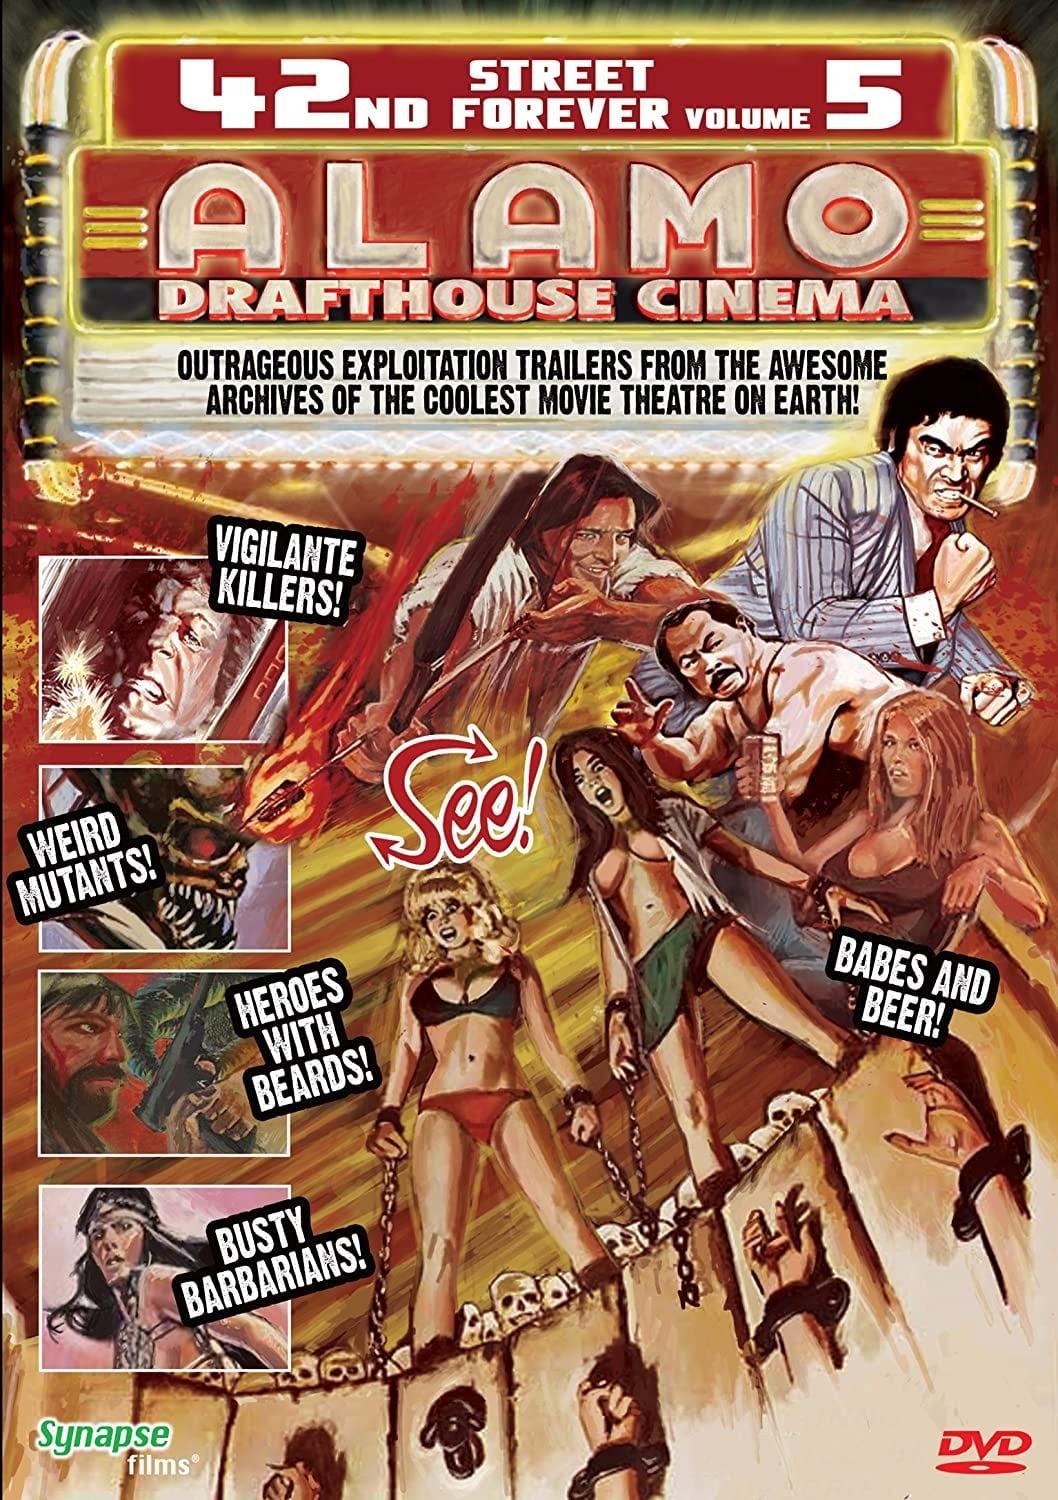 42nd Street Forever, Volume 5: Alamo Drafthouse Cinema poster